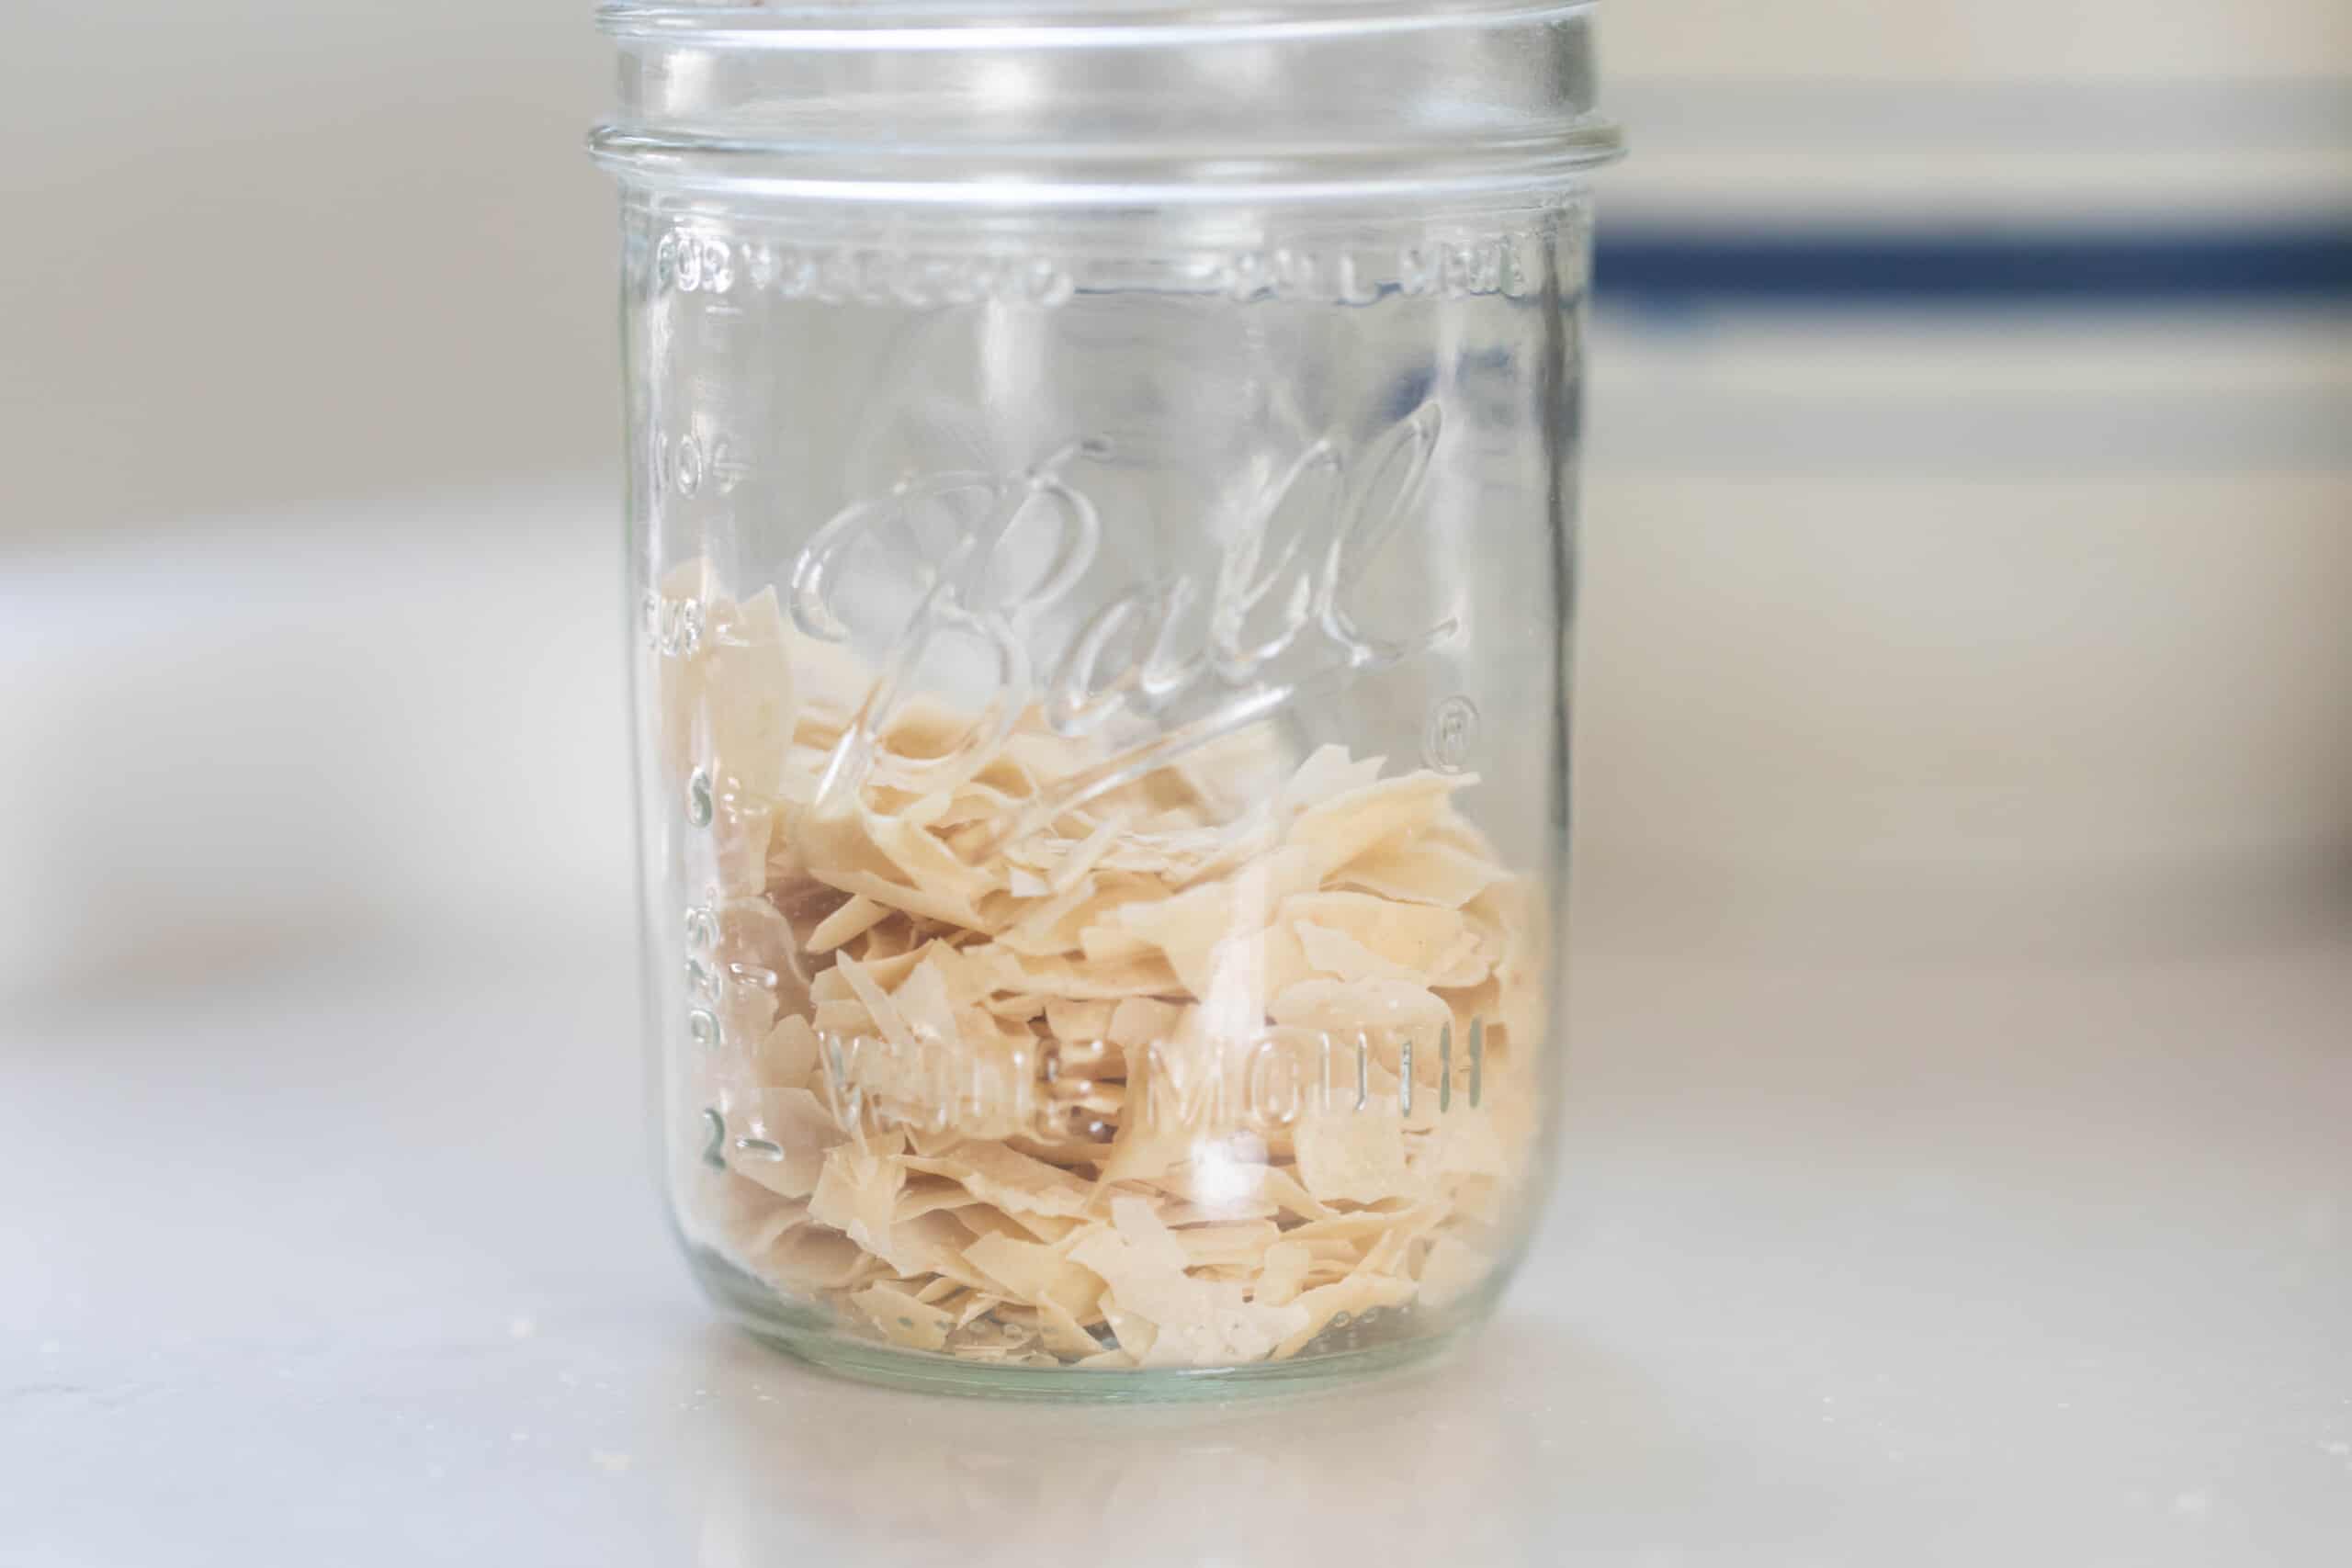 dry sourdough starter in a glass mason jar on a white countertop